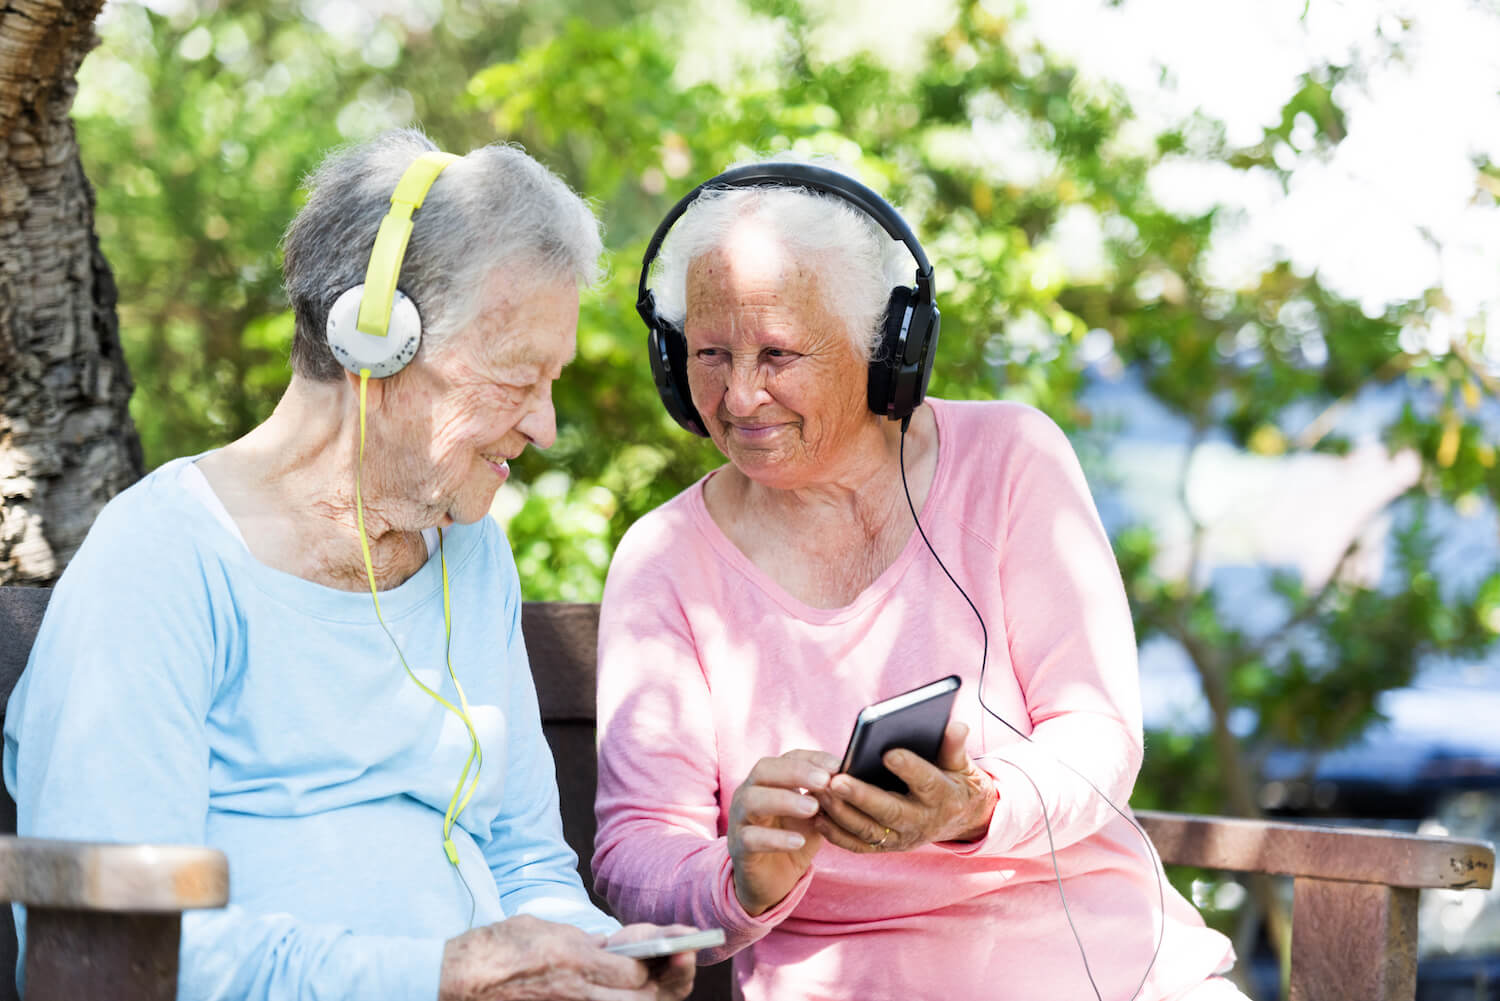 Senior women listening to music together